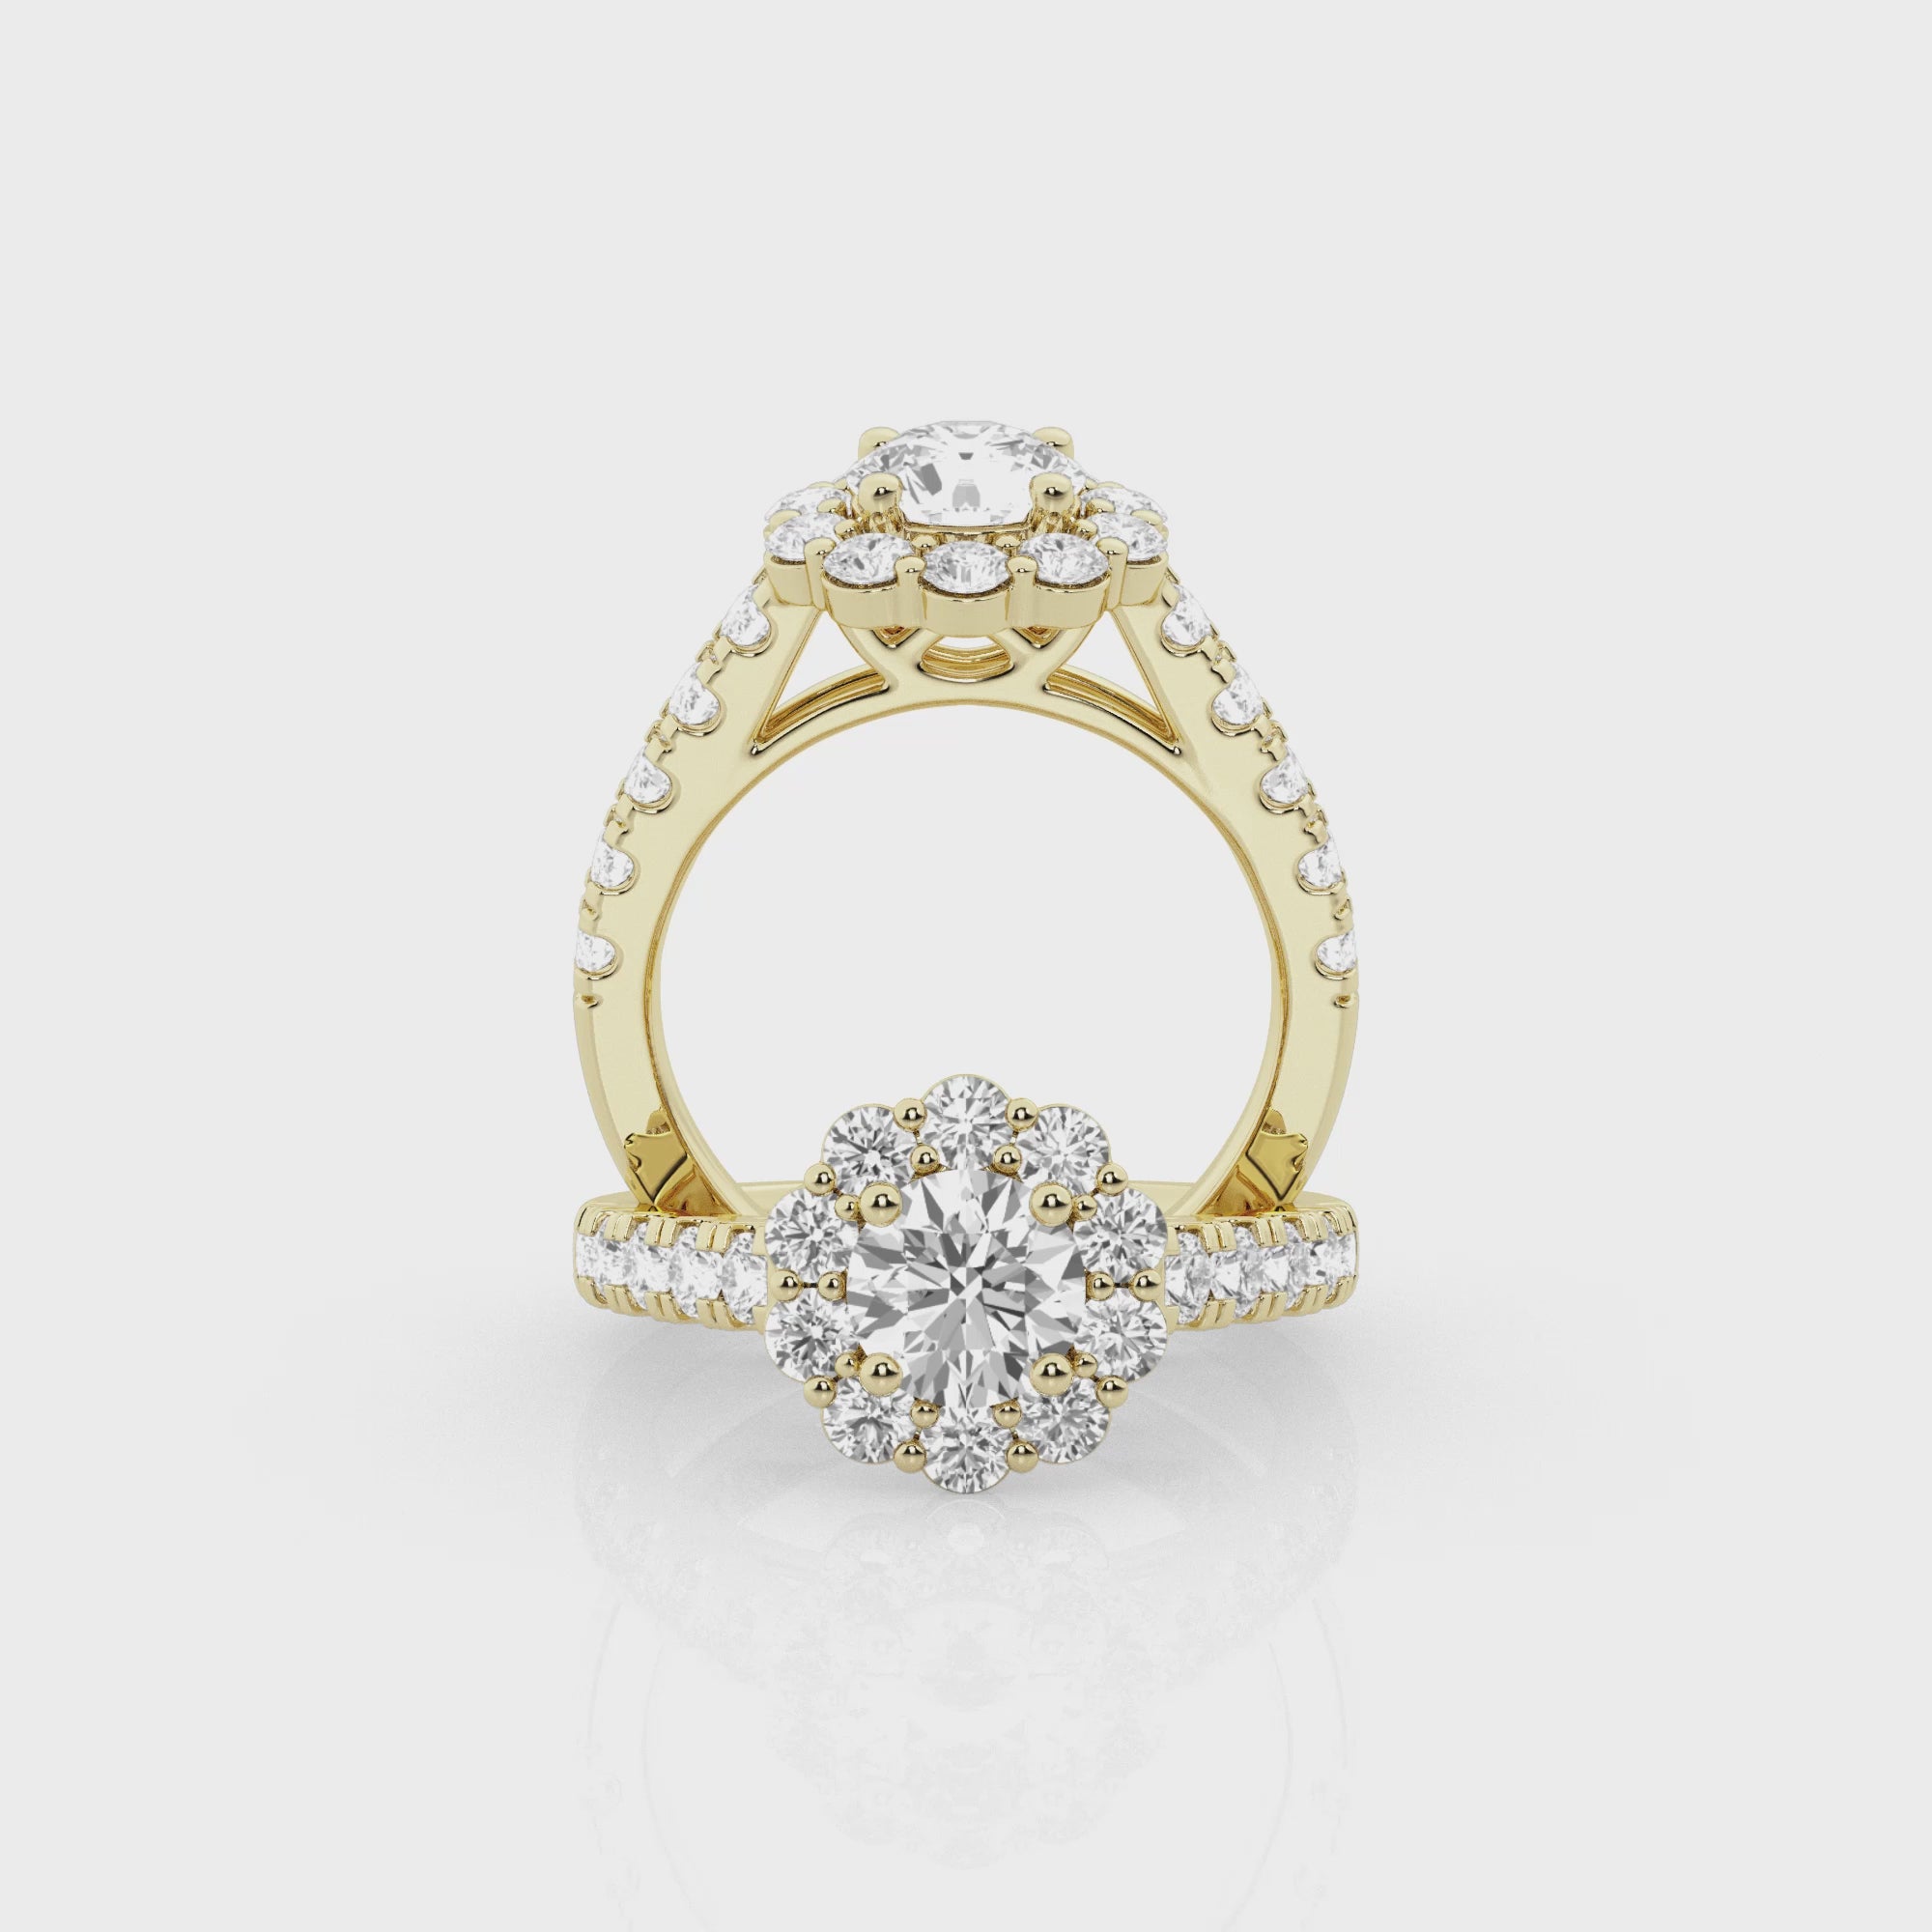 3 carat Round Halo Diamond Ring